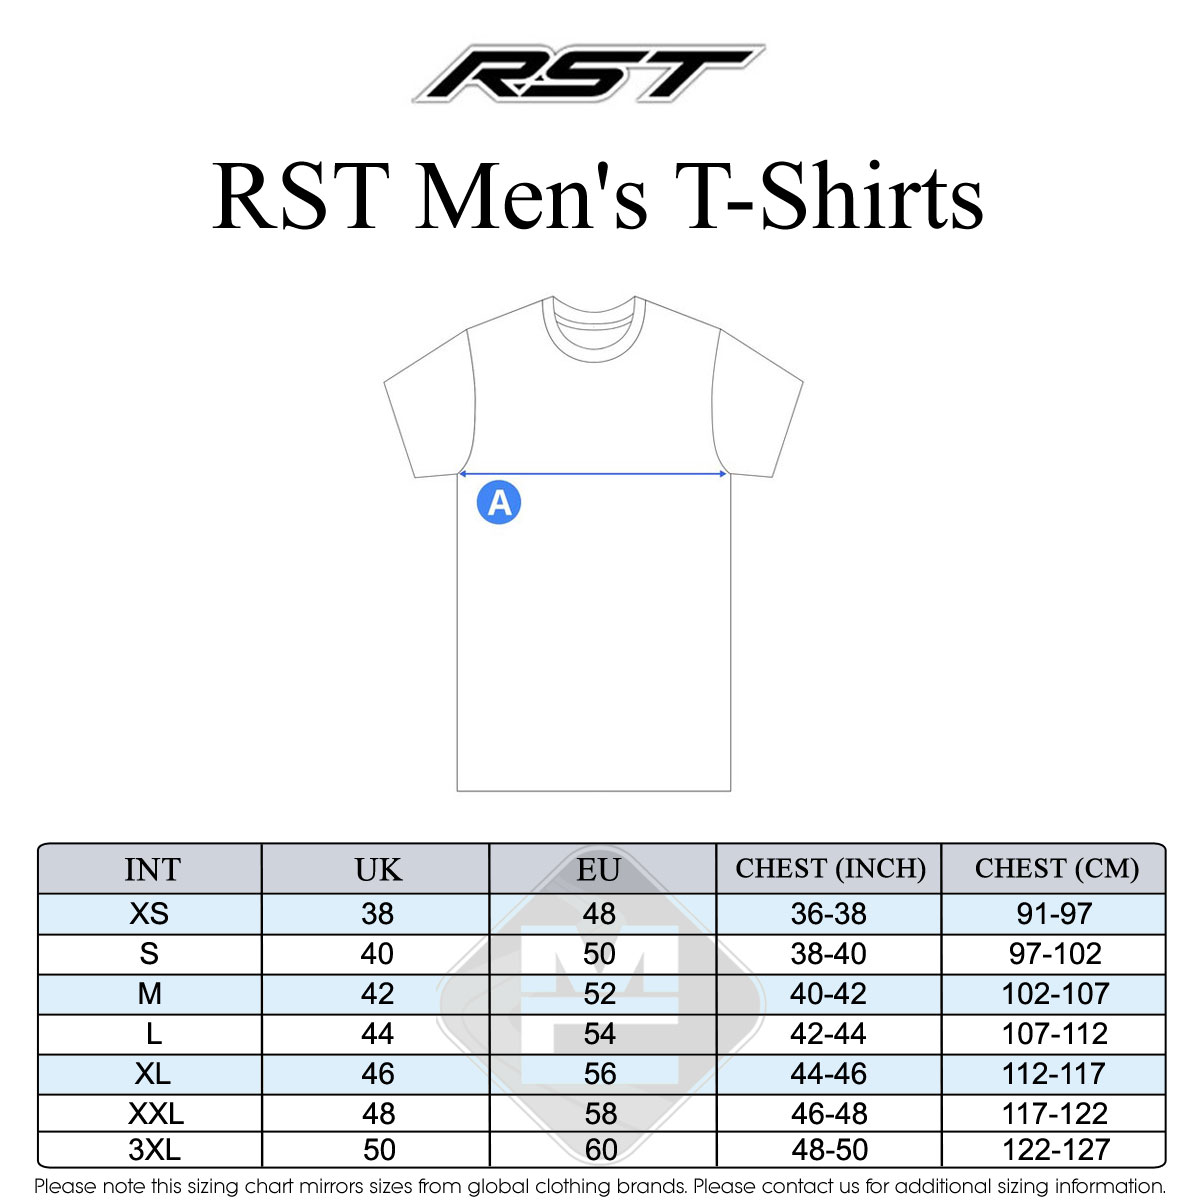 RST Men's Size Guide